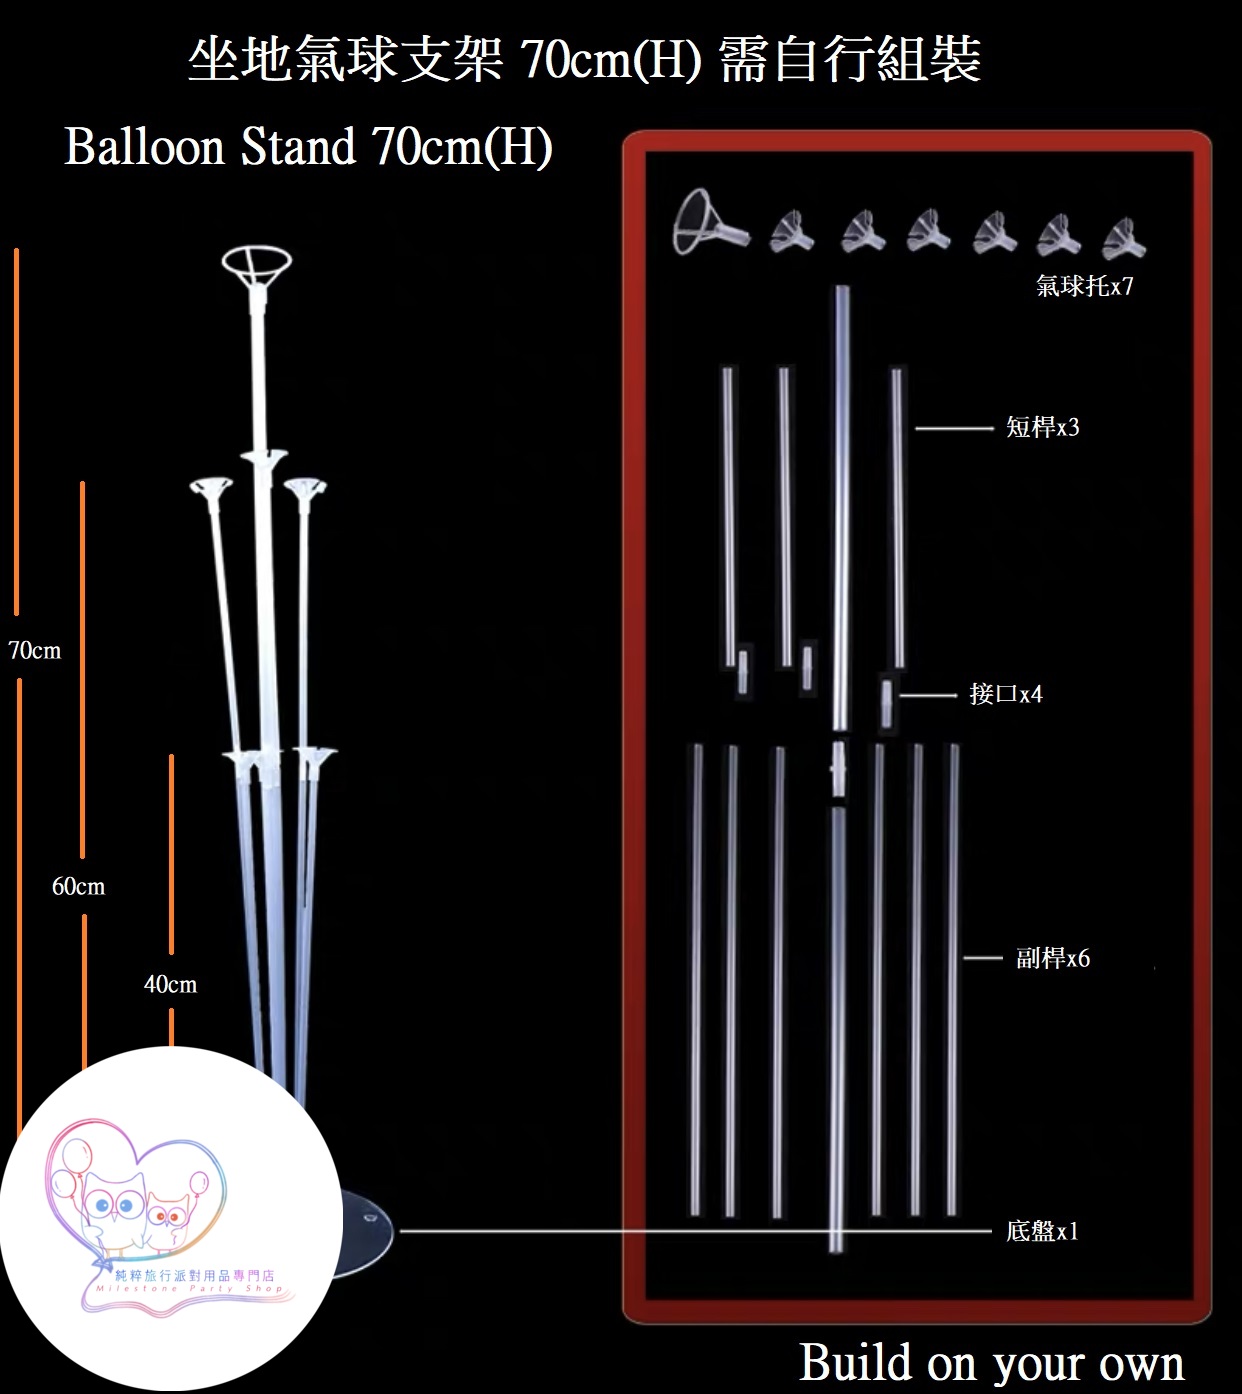 坐地氣球支架 (7球) Balloon Stand 70cm(H) PEDT9-1